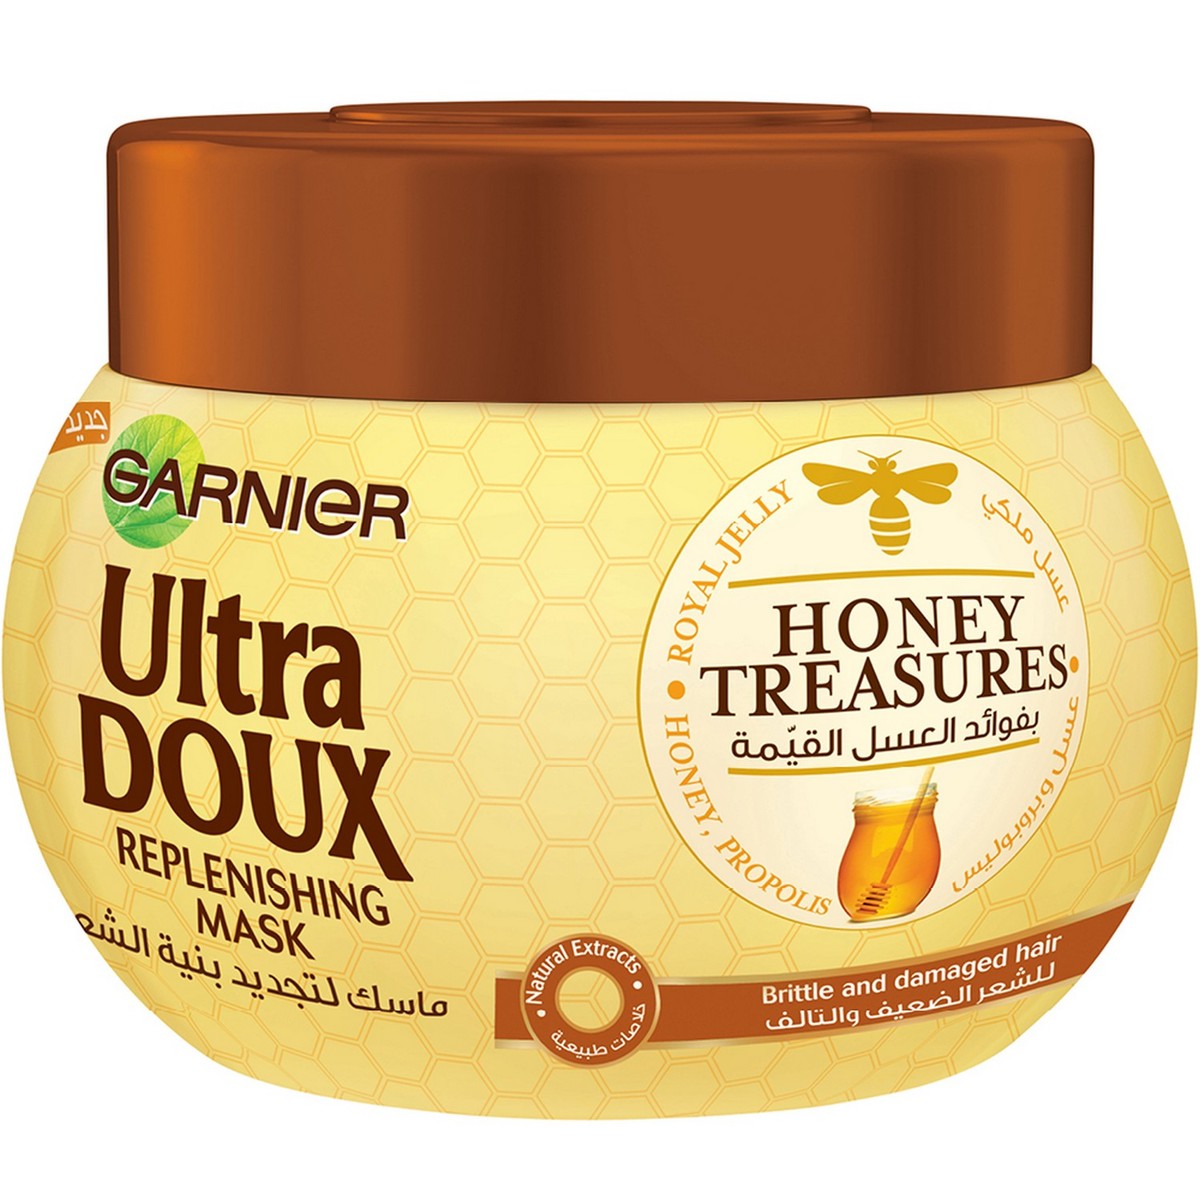 Garnier Ultra Doux Honey Treasures Mask 300 ml